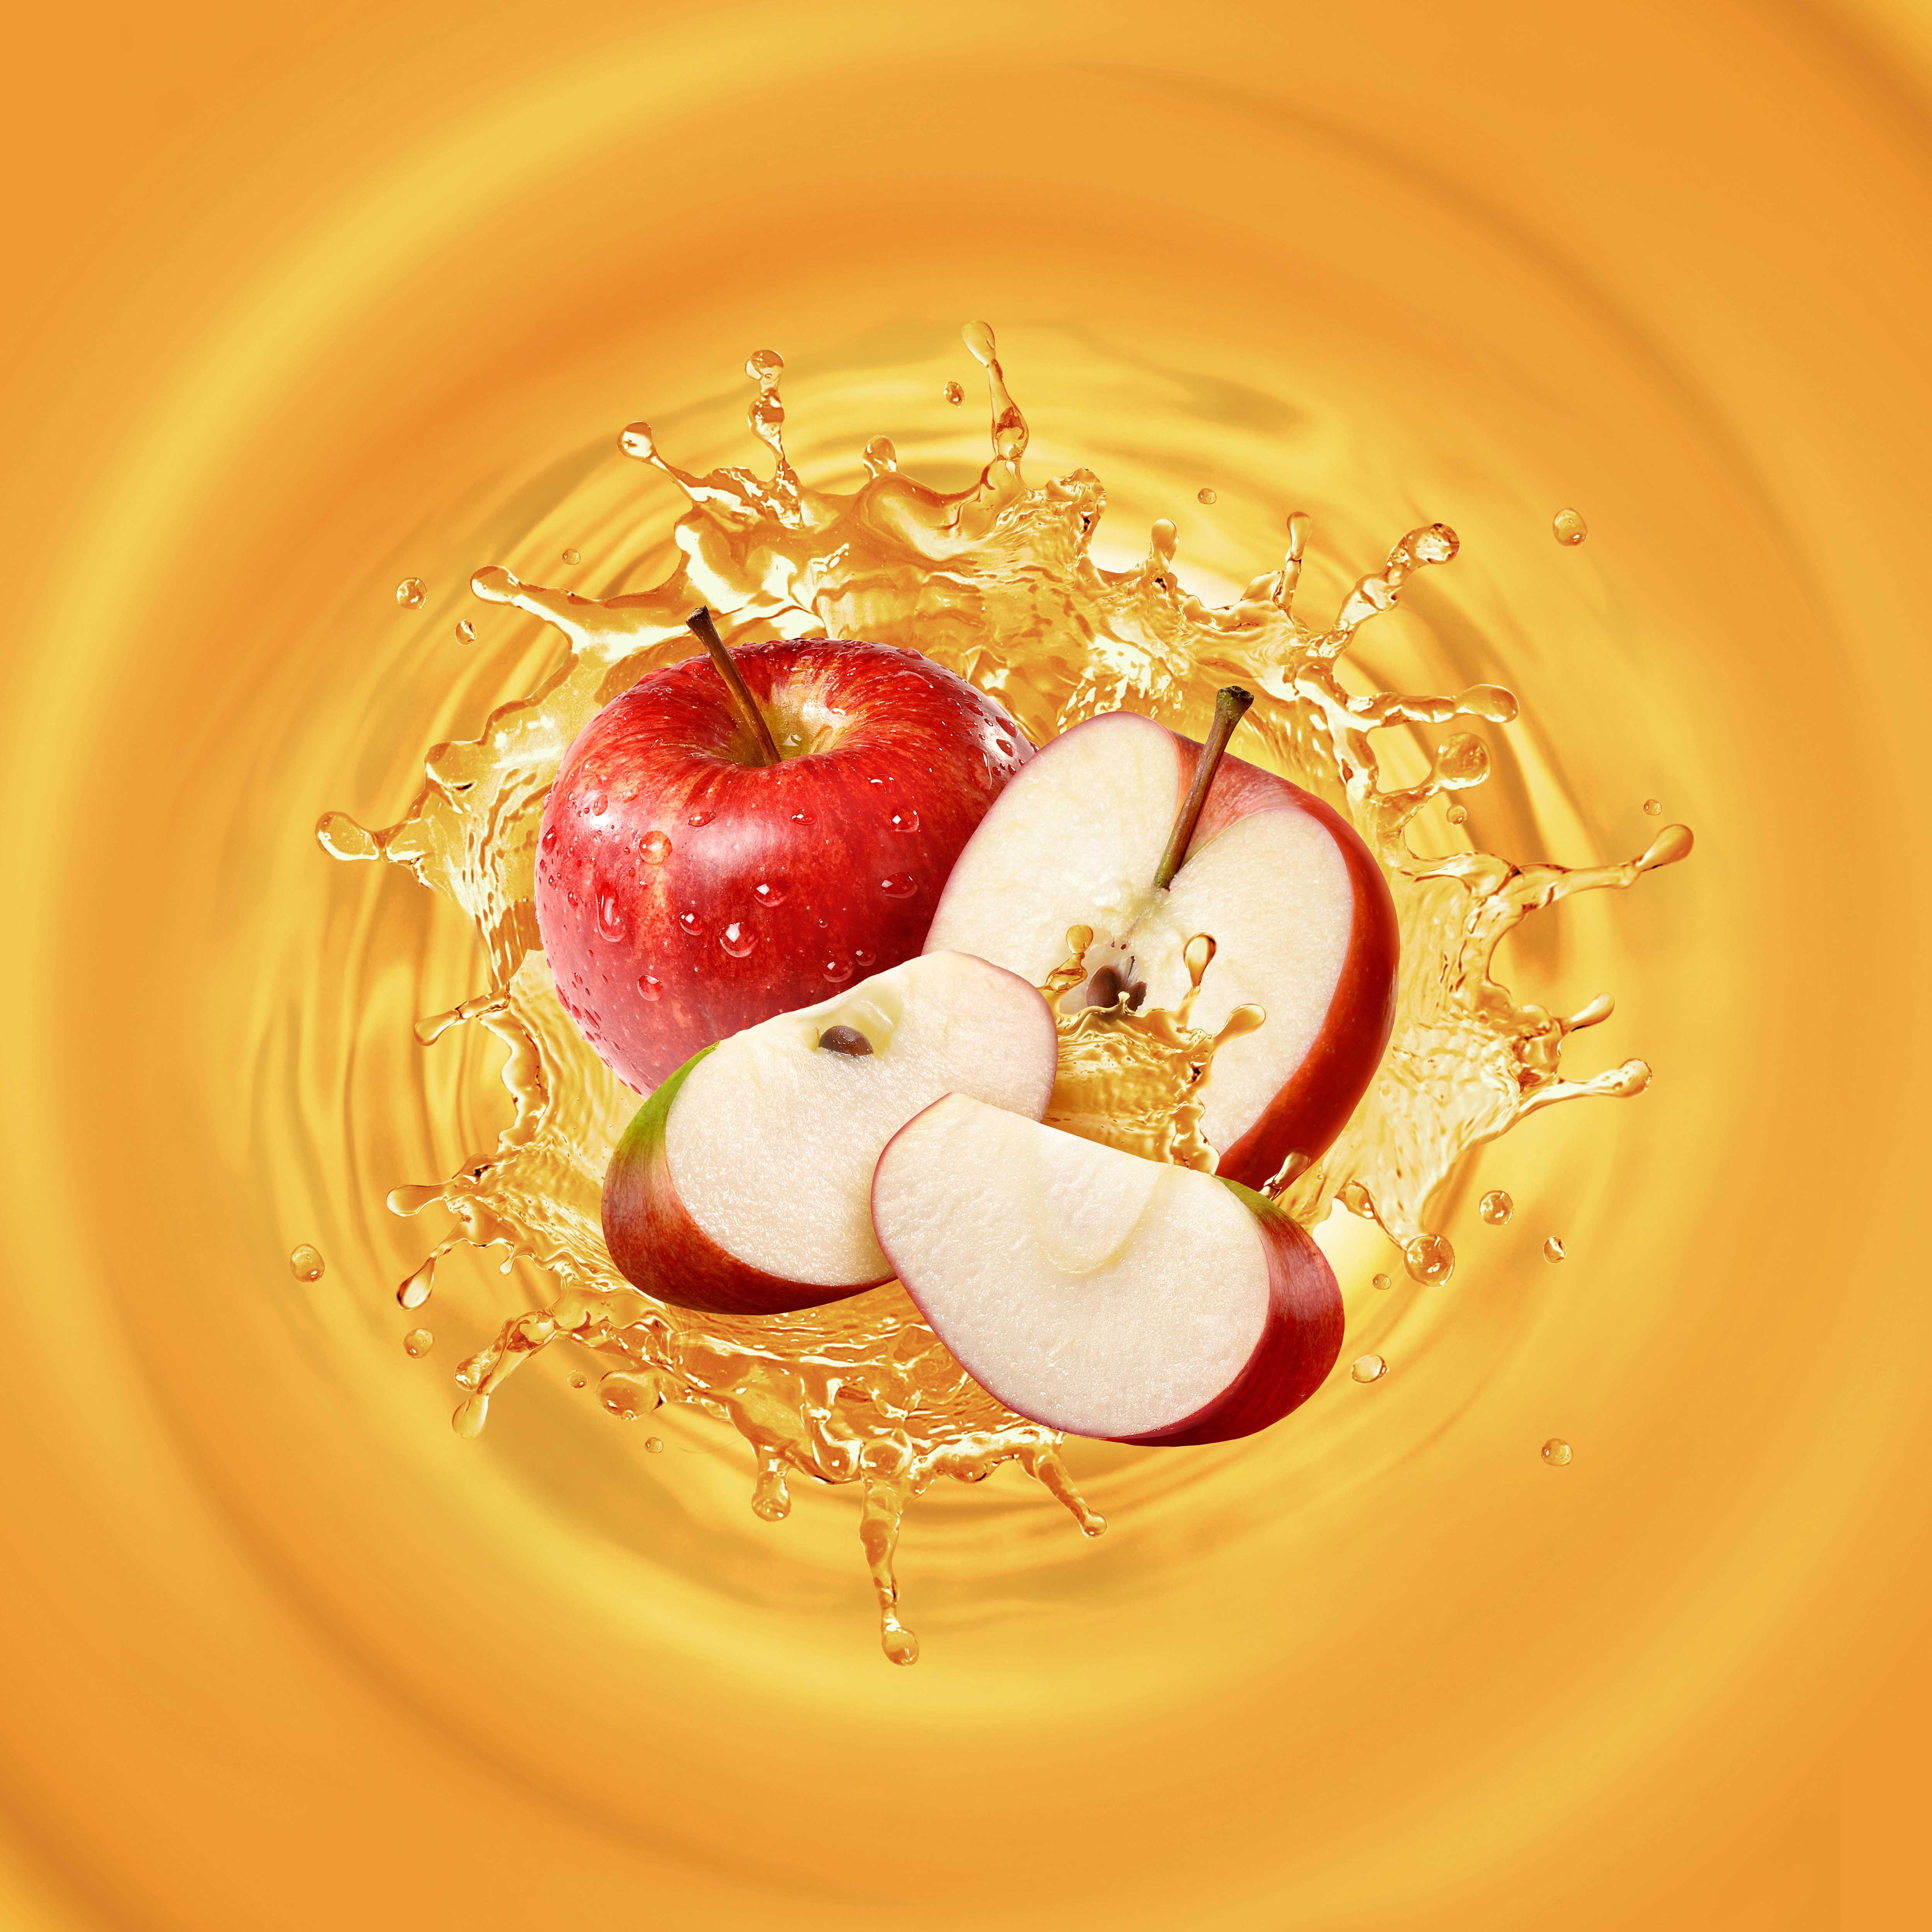 mike wepplo photoreal photography apple juice splash